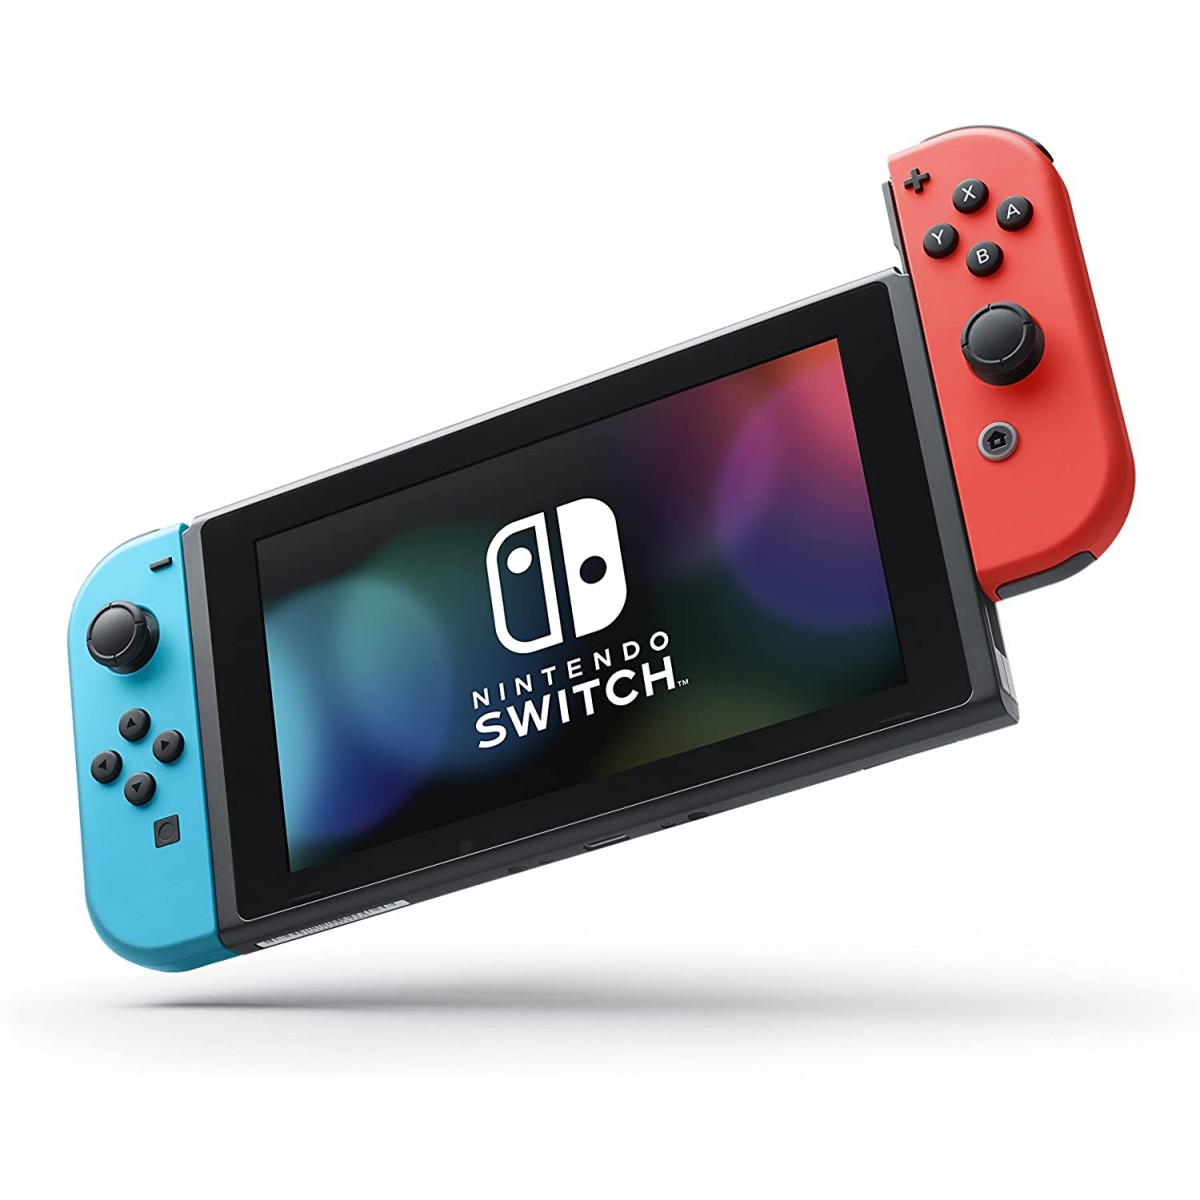 Console Nintendo Switch, 32GB, 1x Joycon, Neon Blue/Red, (Modelo Novo),  HADSKABA1